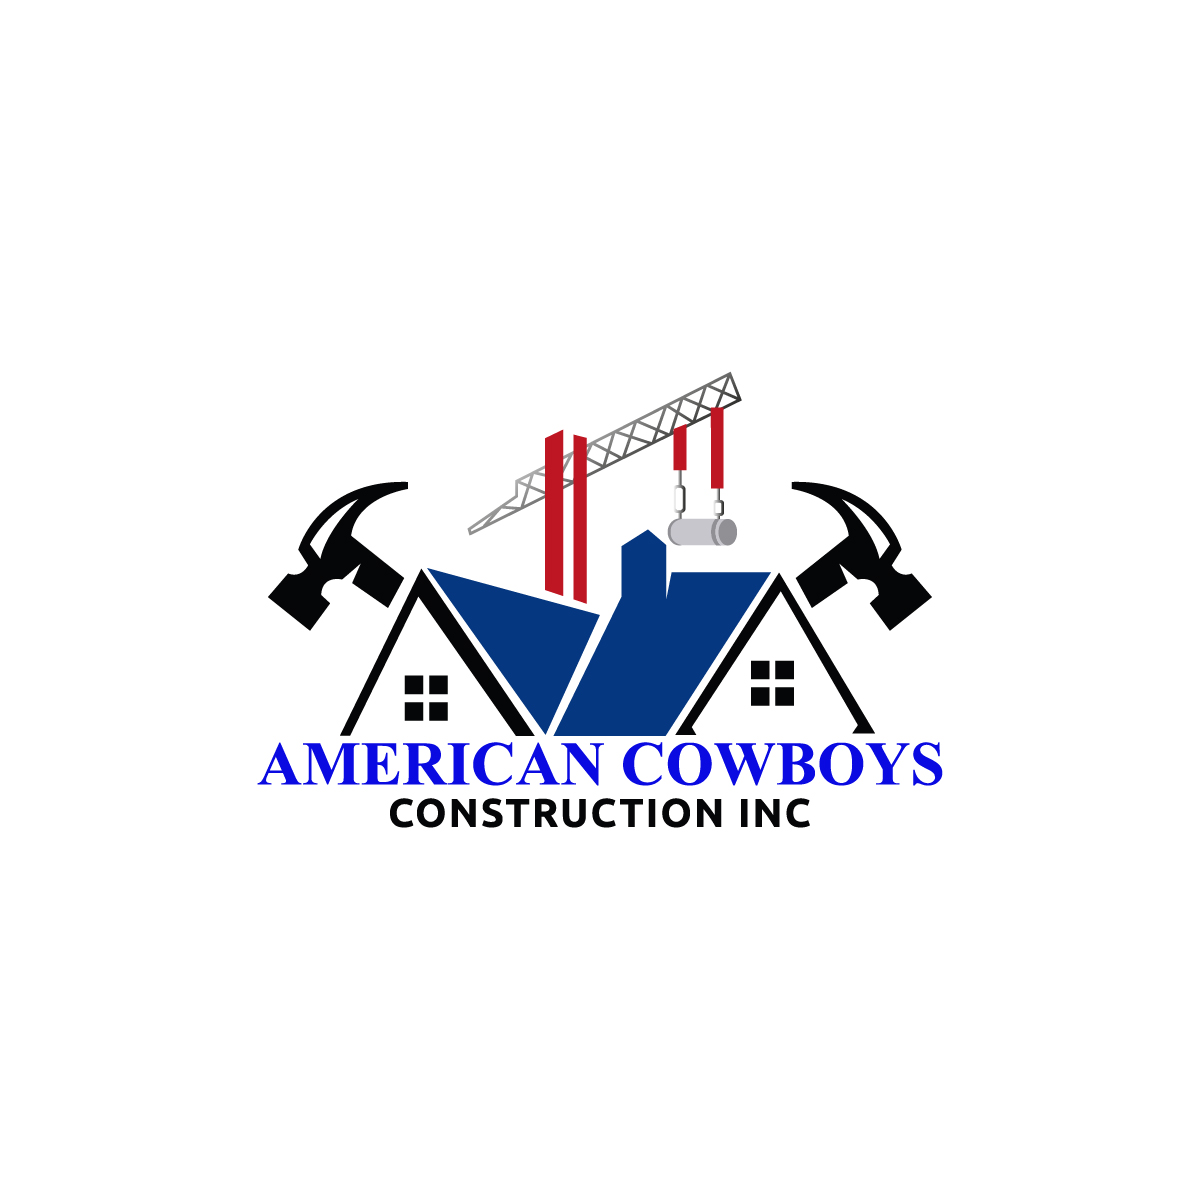 American Cowboys Construction Inc